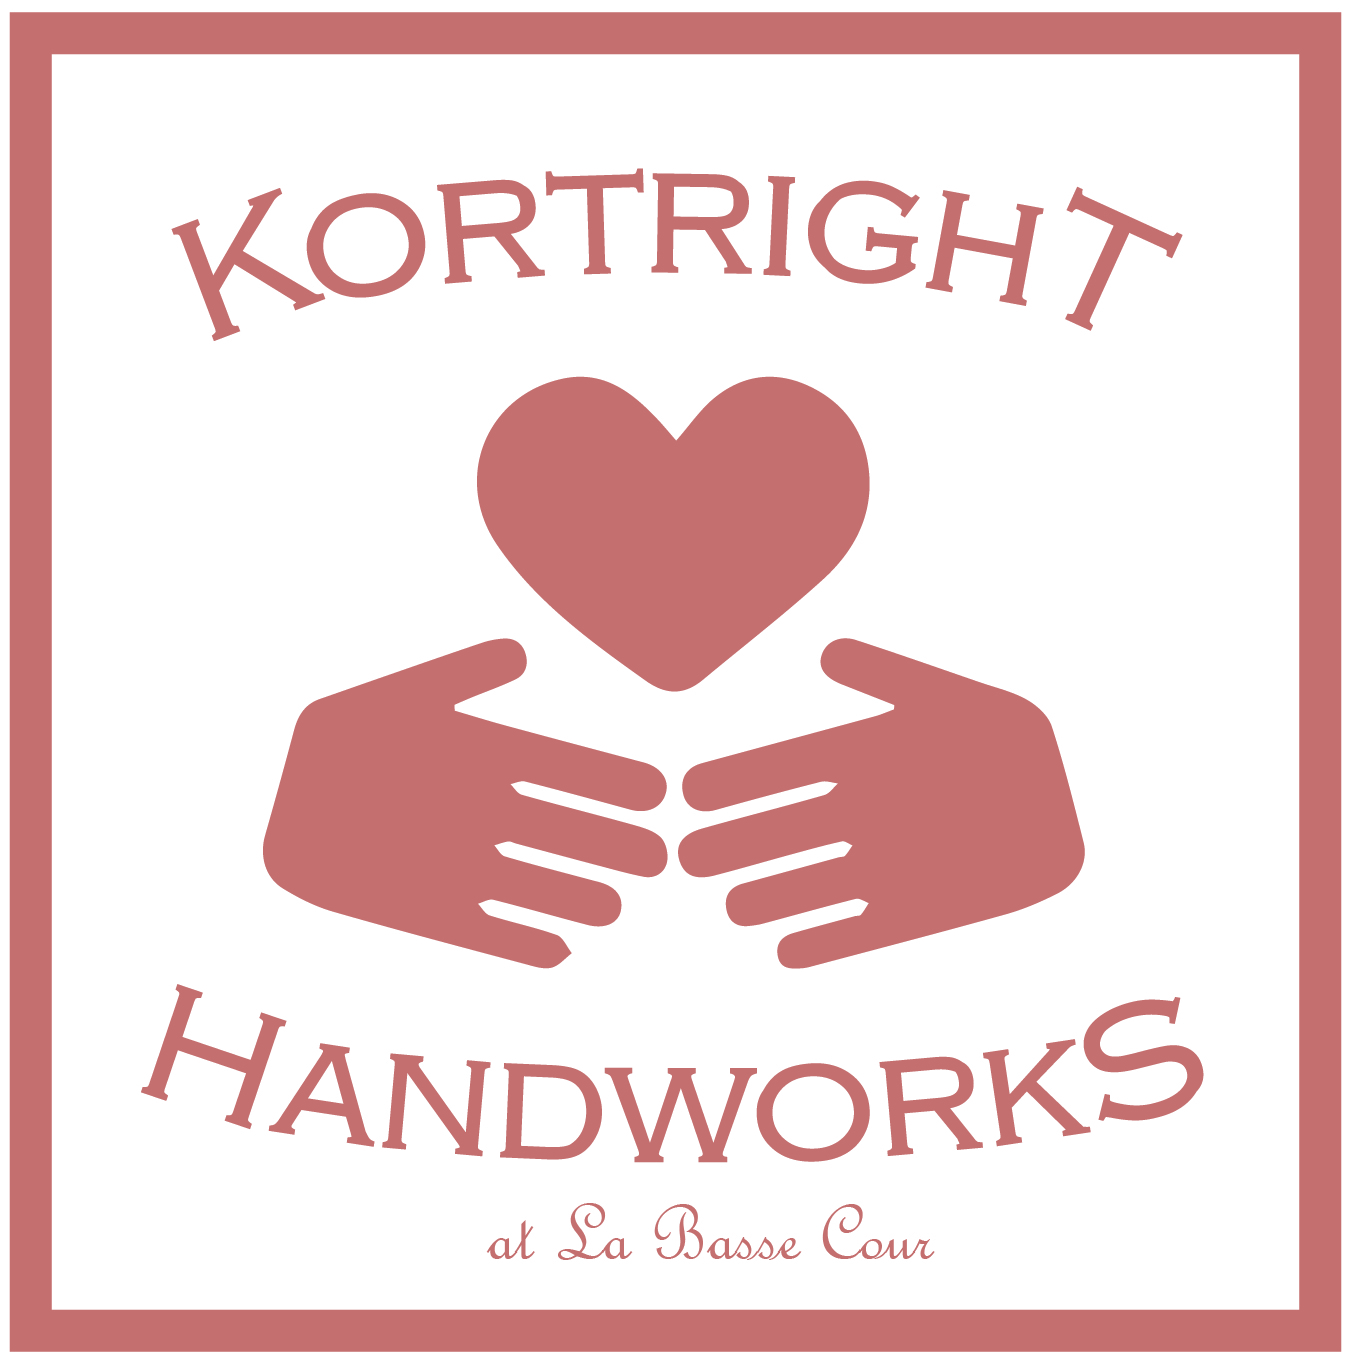 kortright handworks logo with at lbc inside.jpg